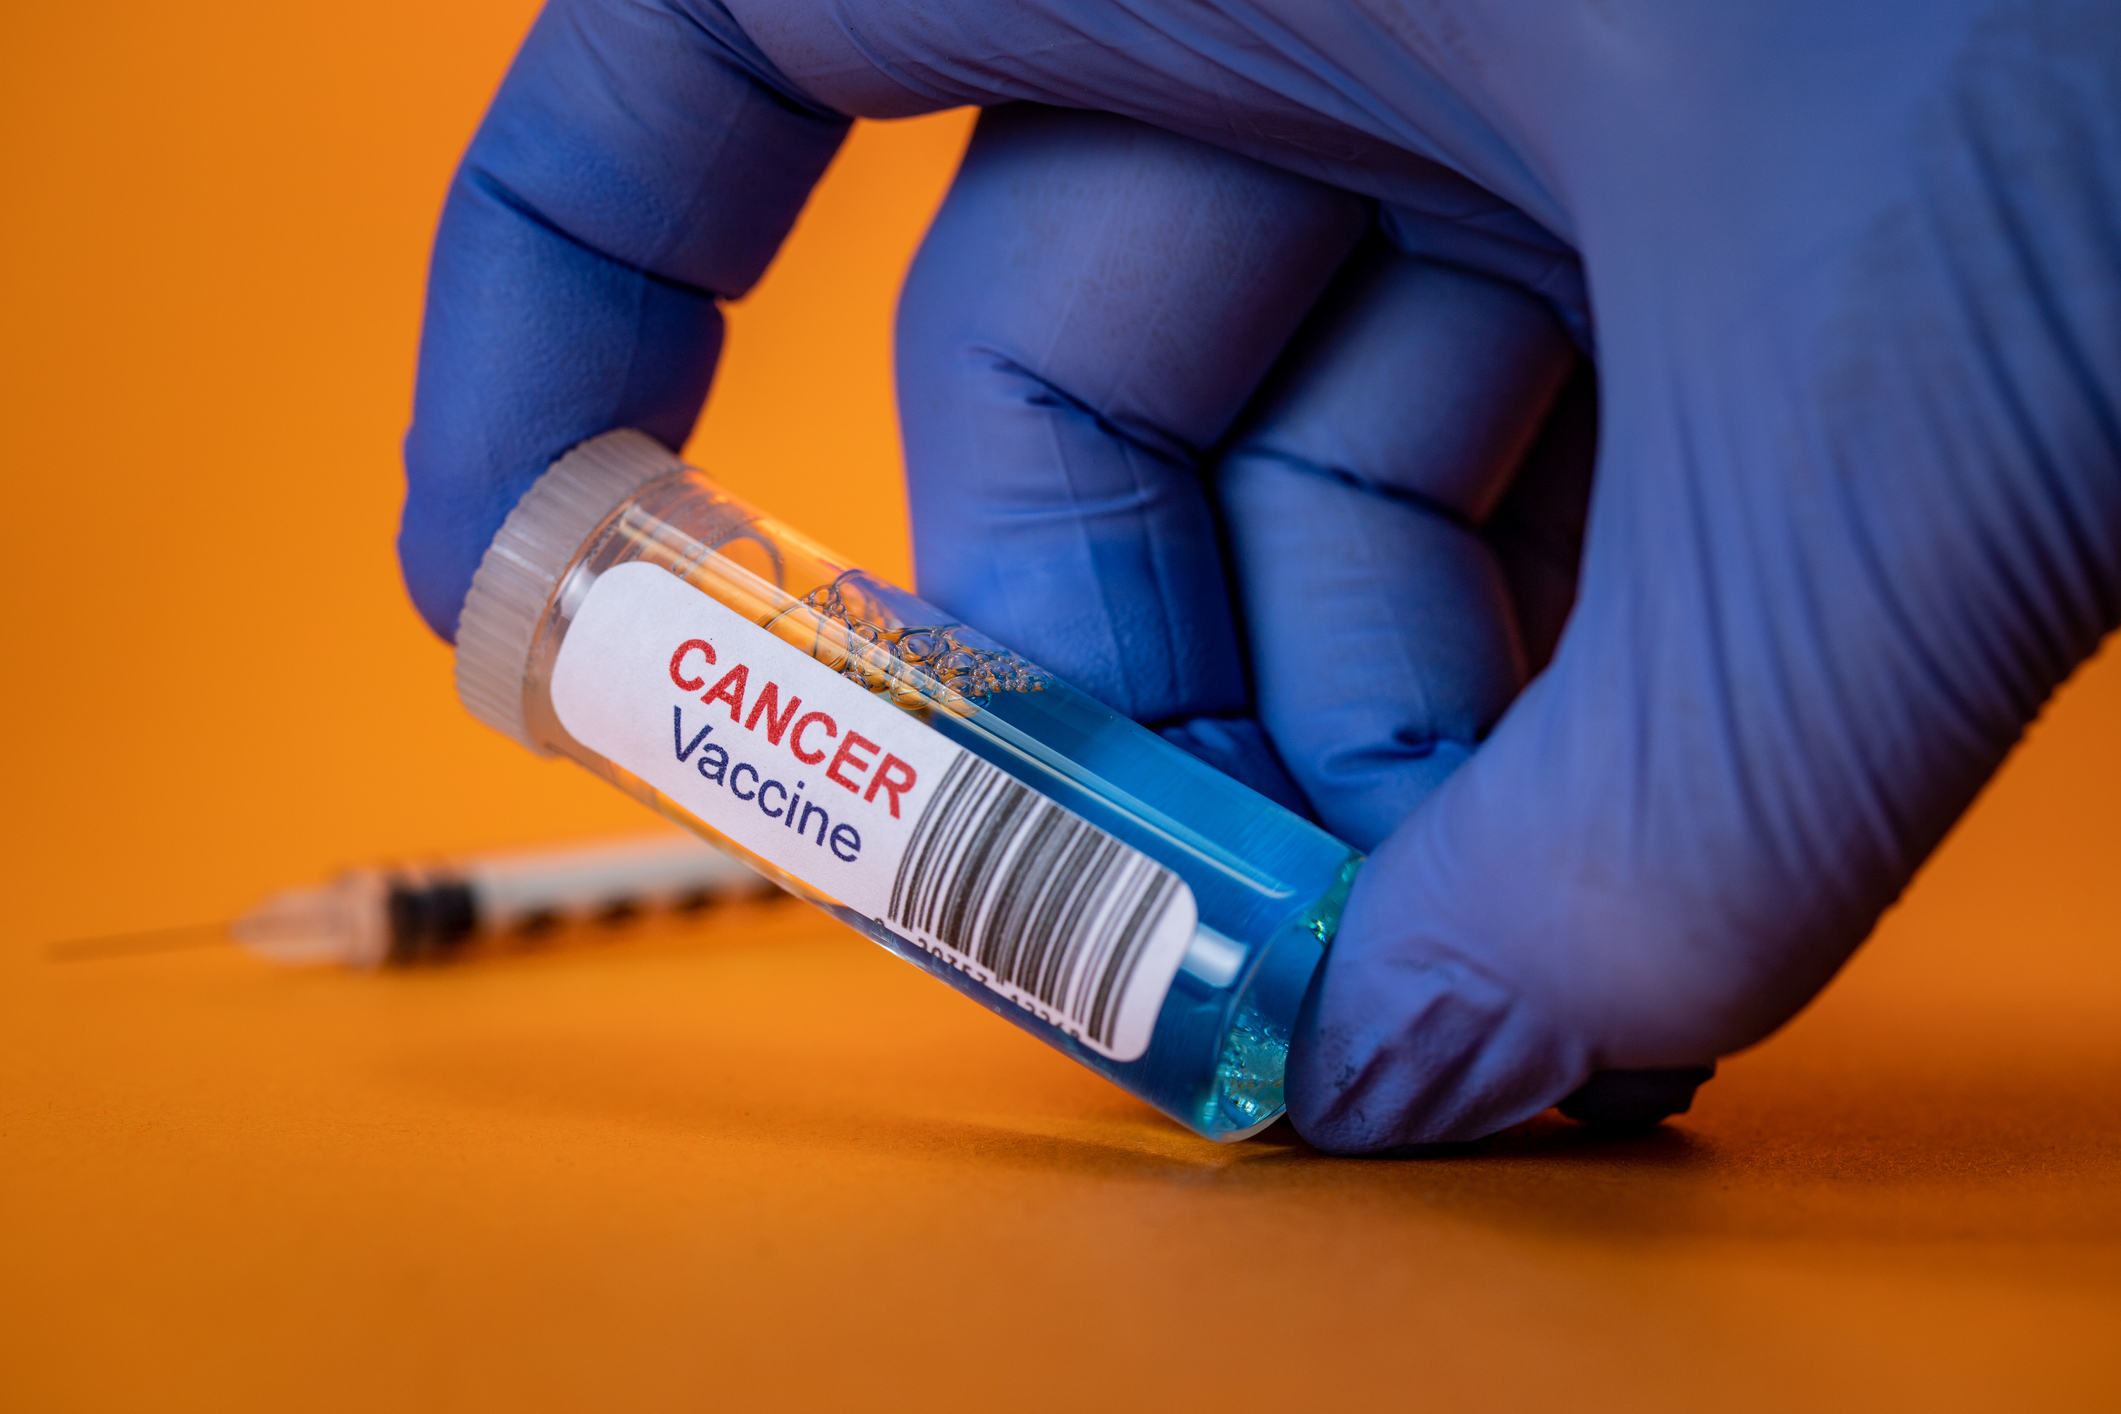 Caancer Vaccine Getty Images